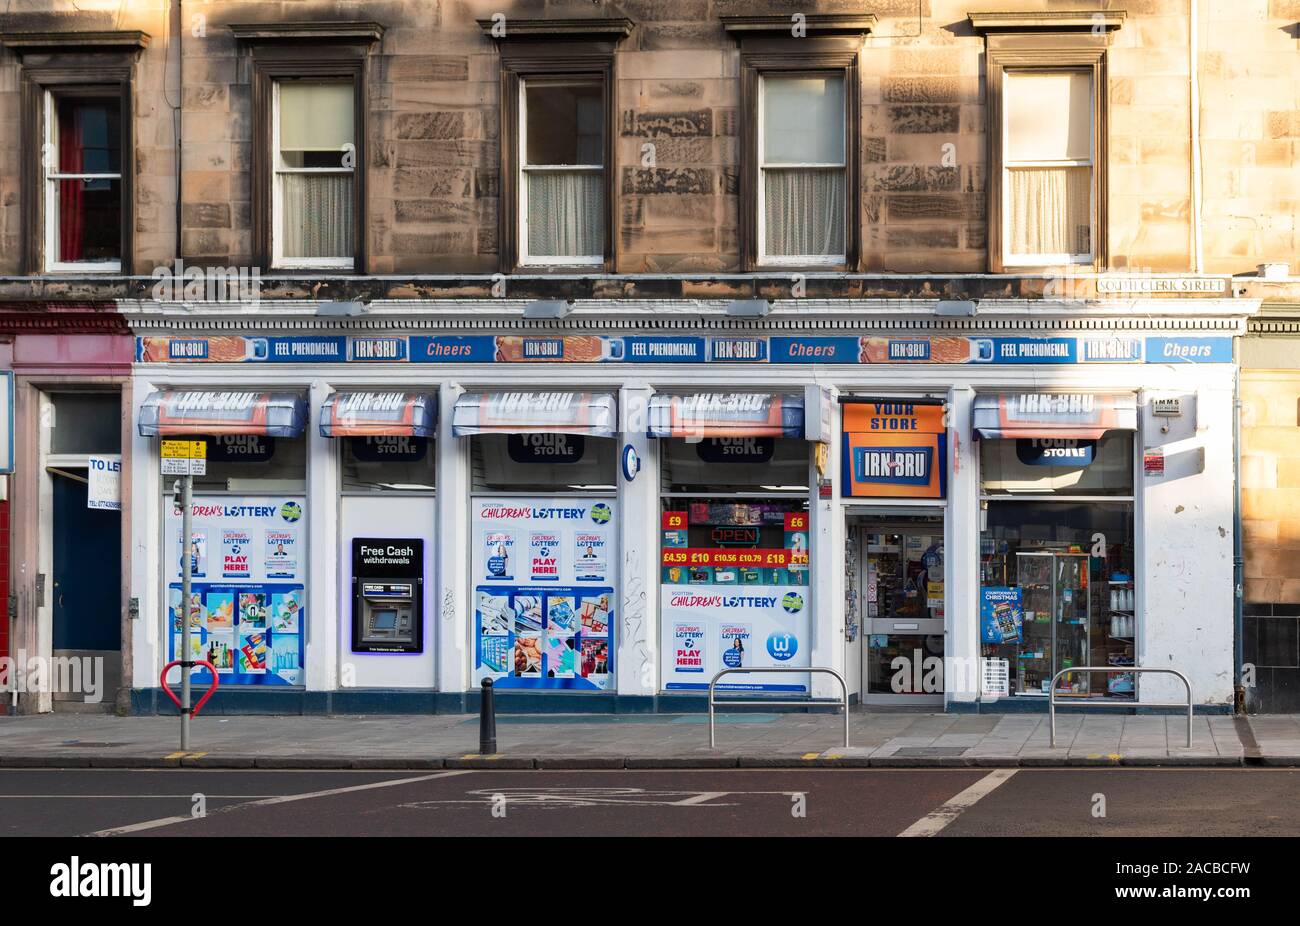 Irn Bru advertising on convenience store 'Your Store', Newington, Edinburgh, Scotland, UK Stock Photo